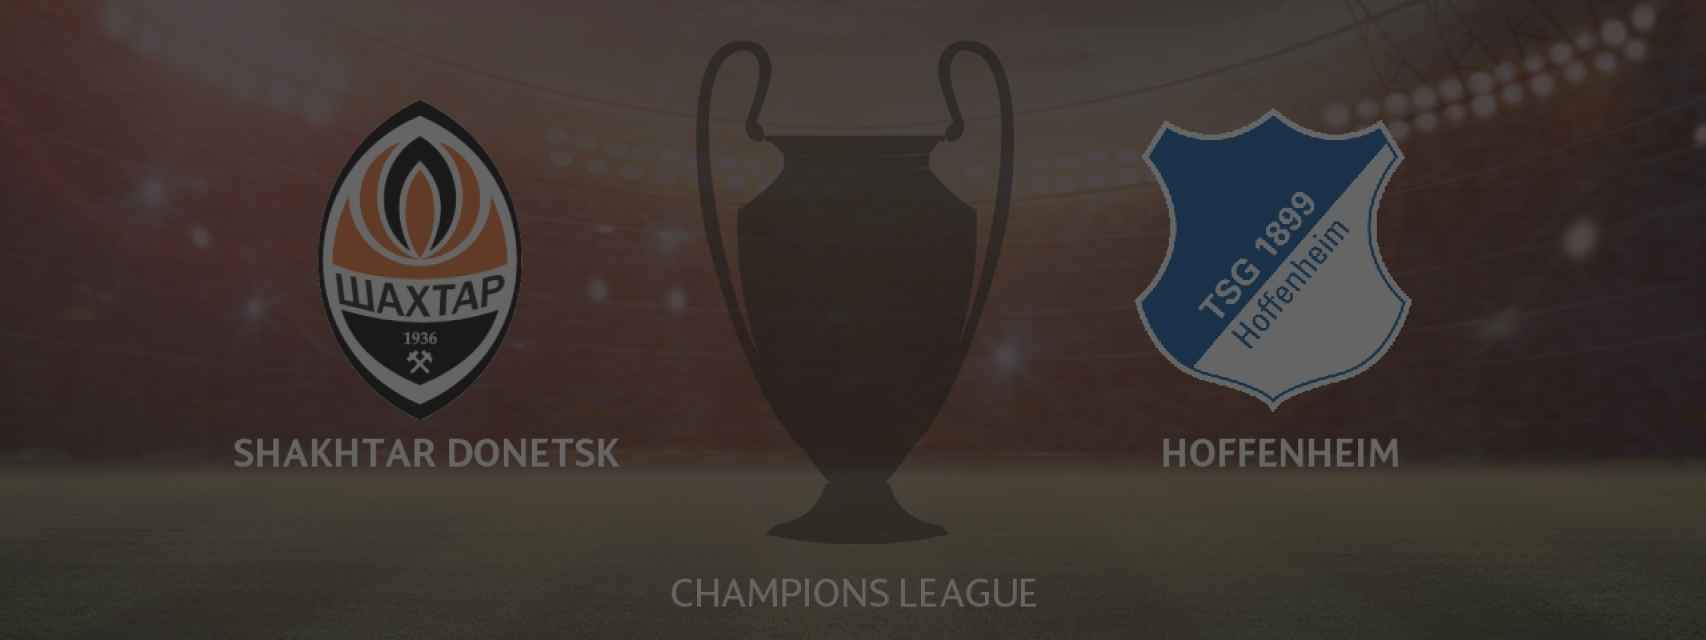 Shakhtar Donetsk - Hoffenheim, siga en directo el partido de la Champions League